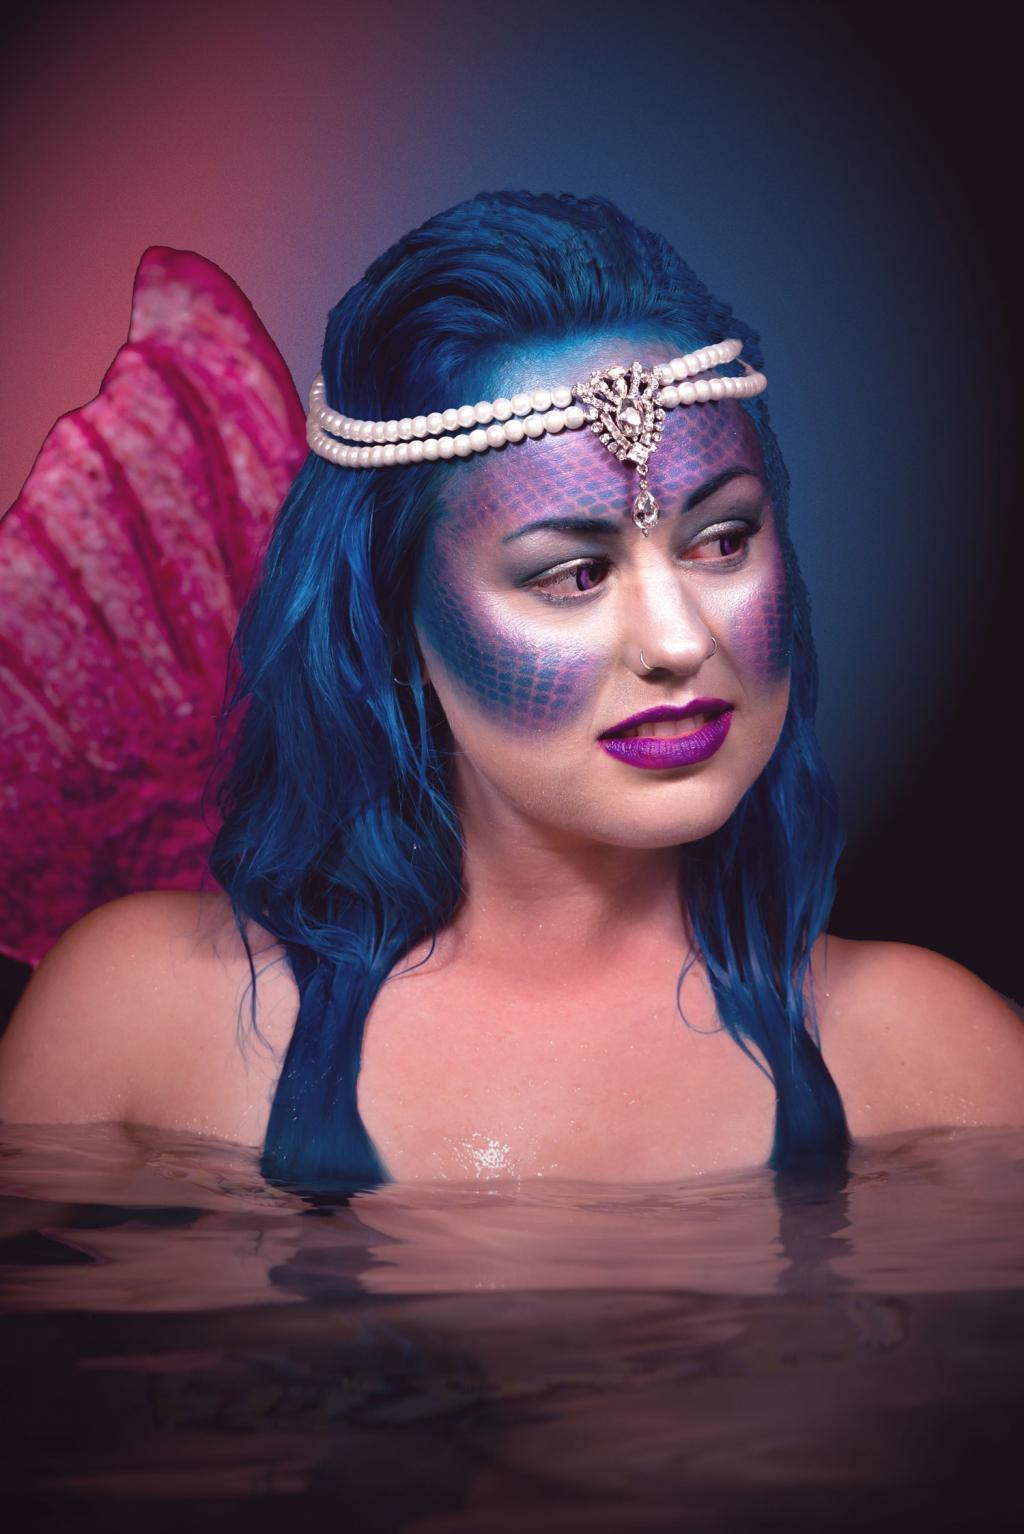 Mermaid_Makeup_istock-Lpcornish